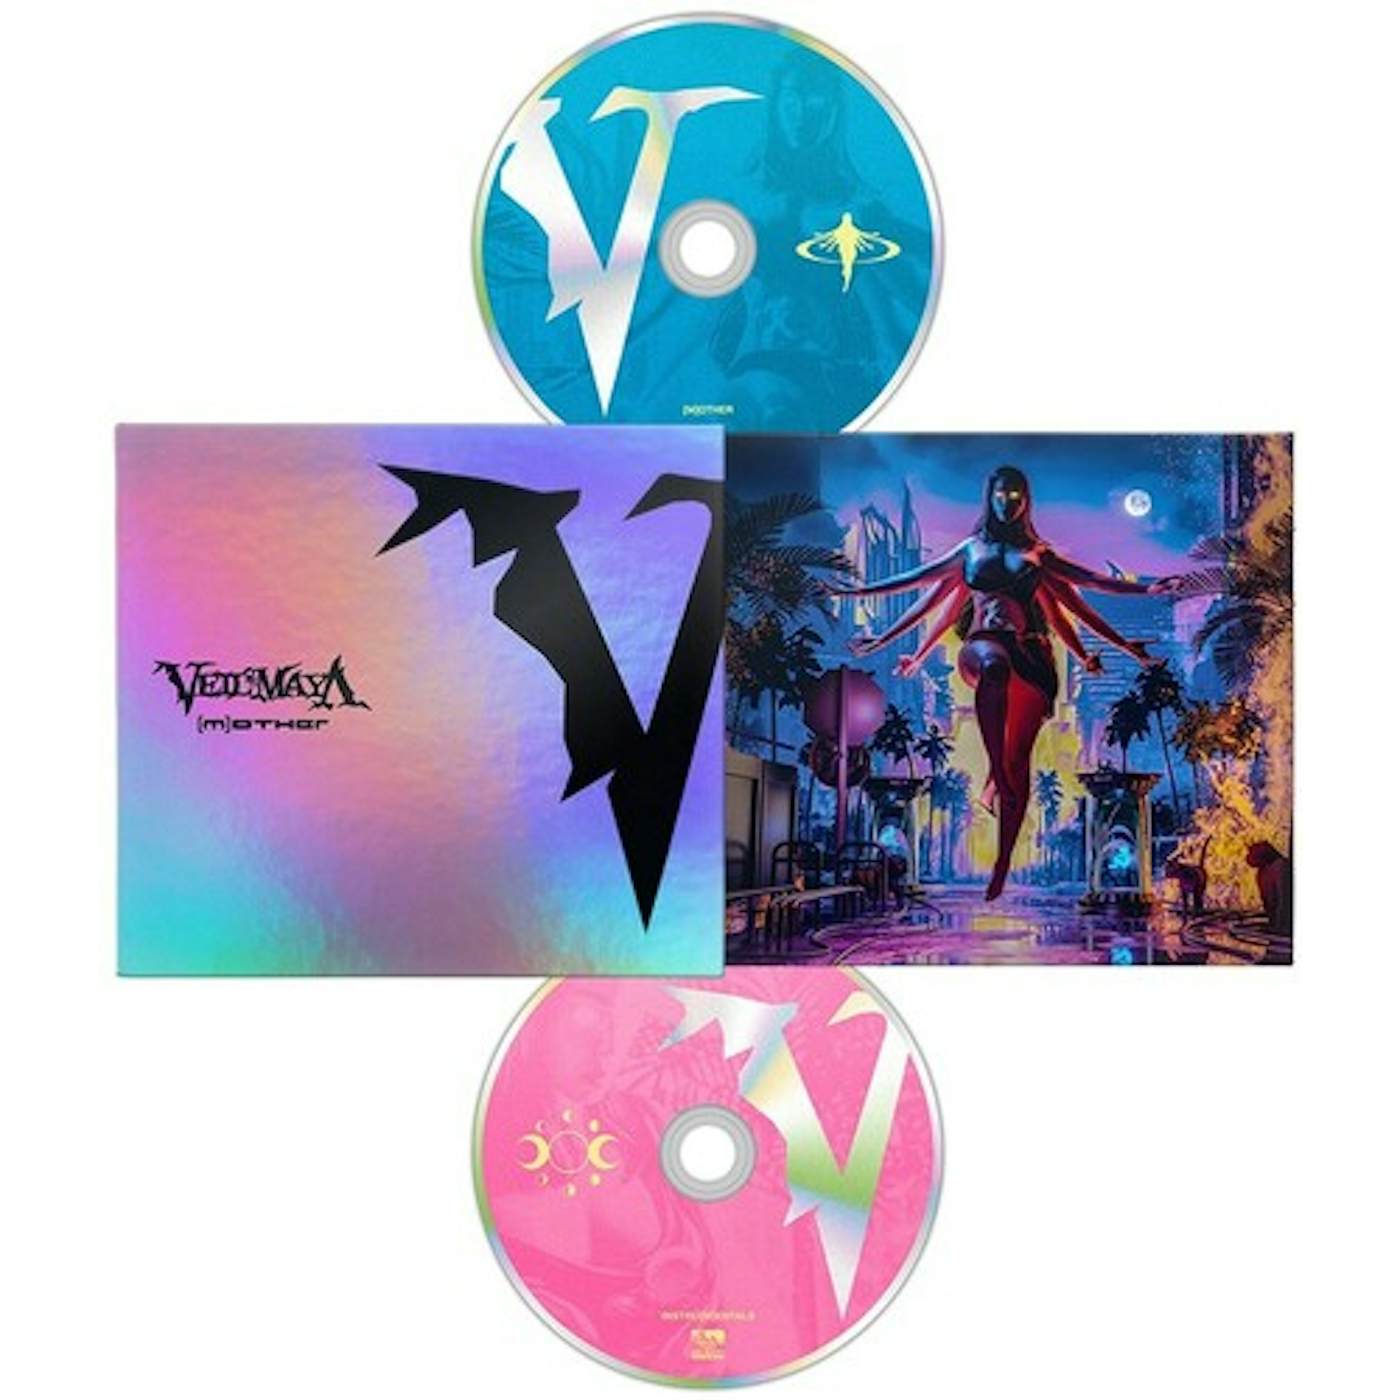 Veil Of Maya [M]OTHER CD